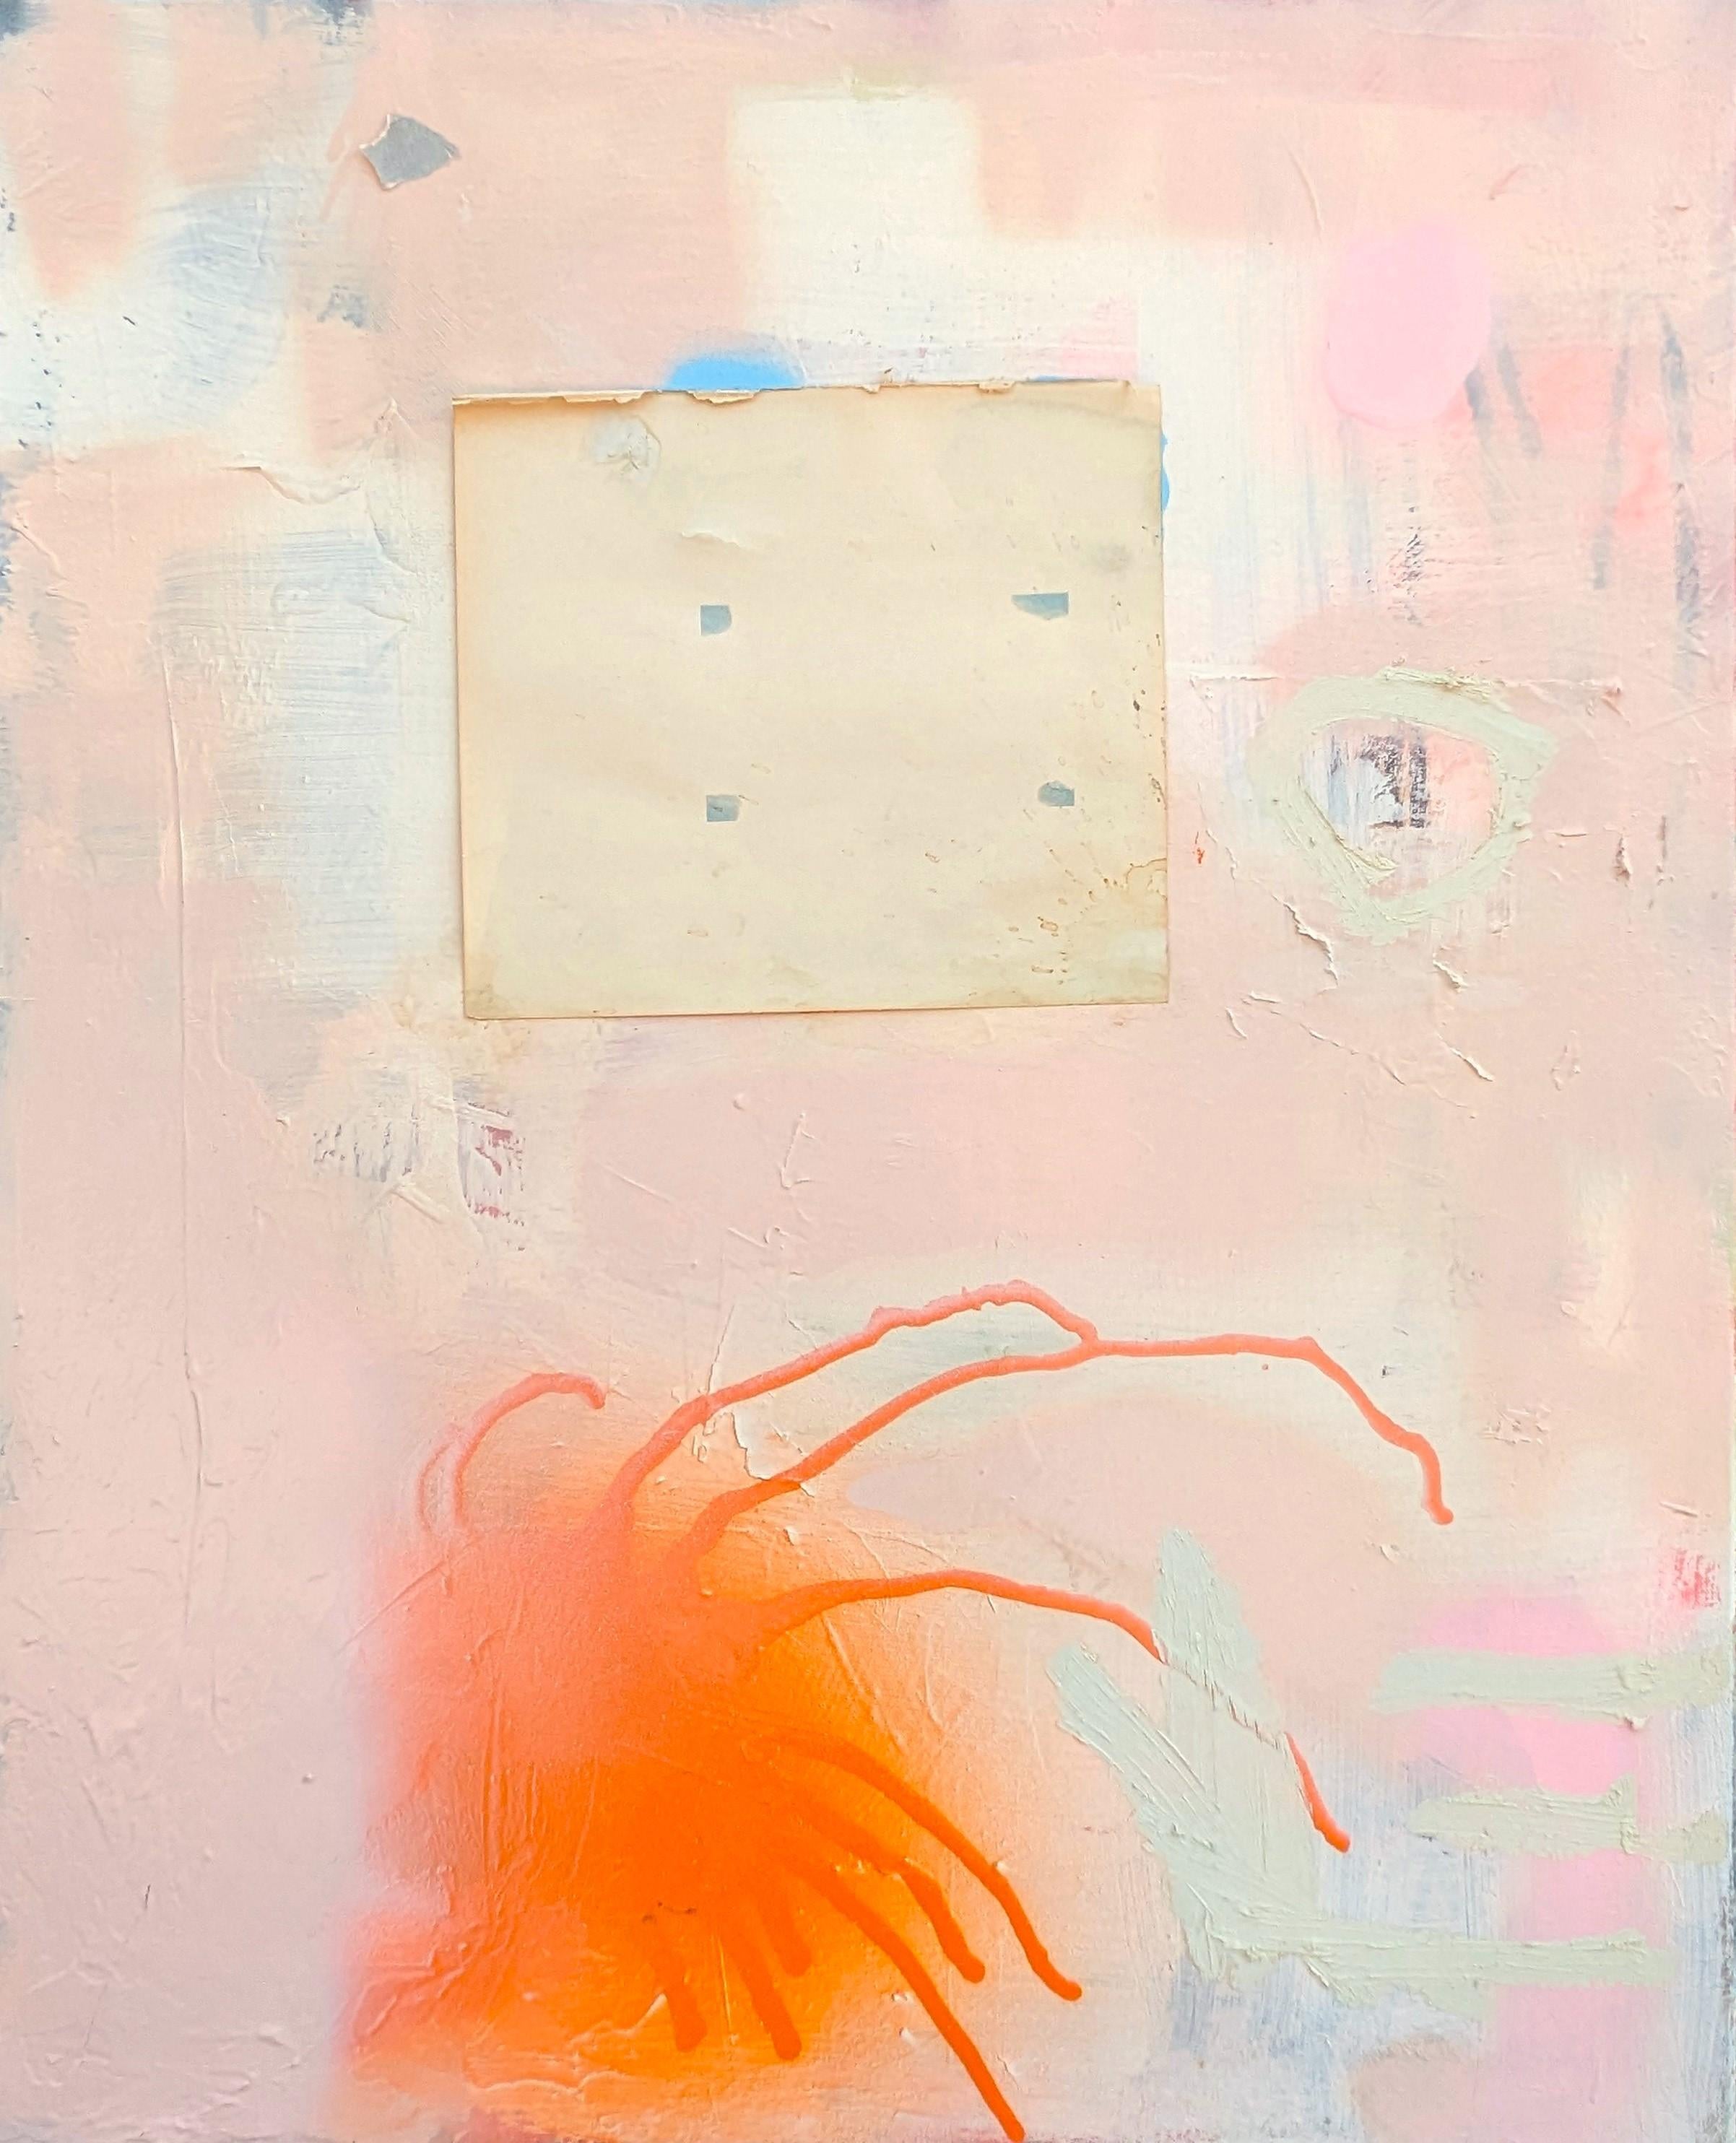 Benji Stiles Abstract Painting – "Ohne Titel (Blaue Punkte)" Contemporary Pastell Abstrakter Expressionist Ölgemälde